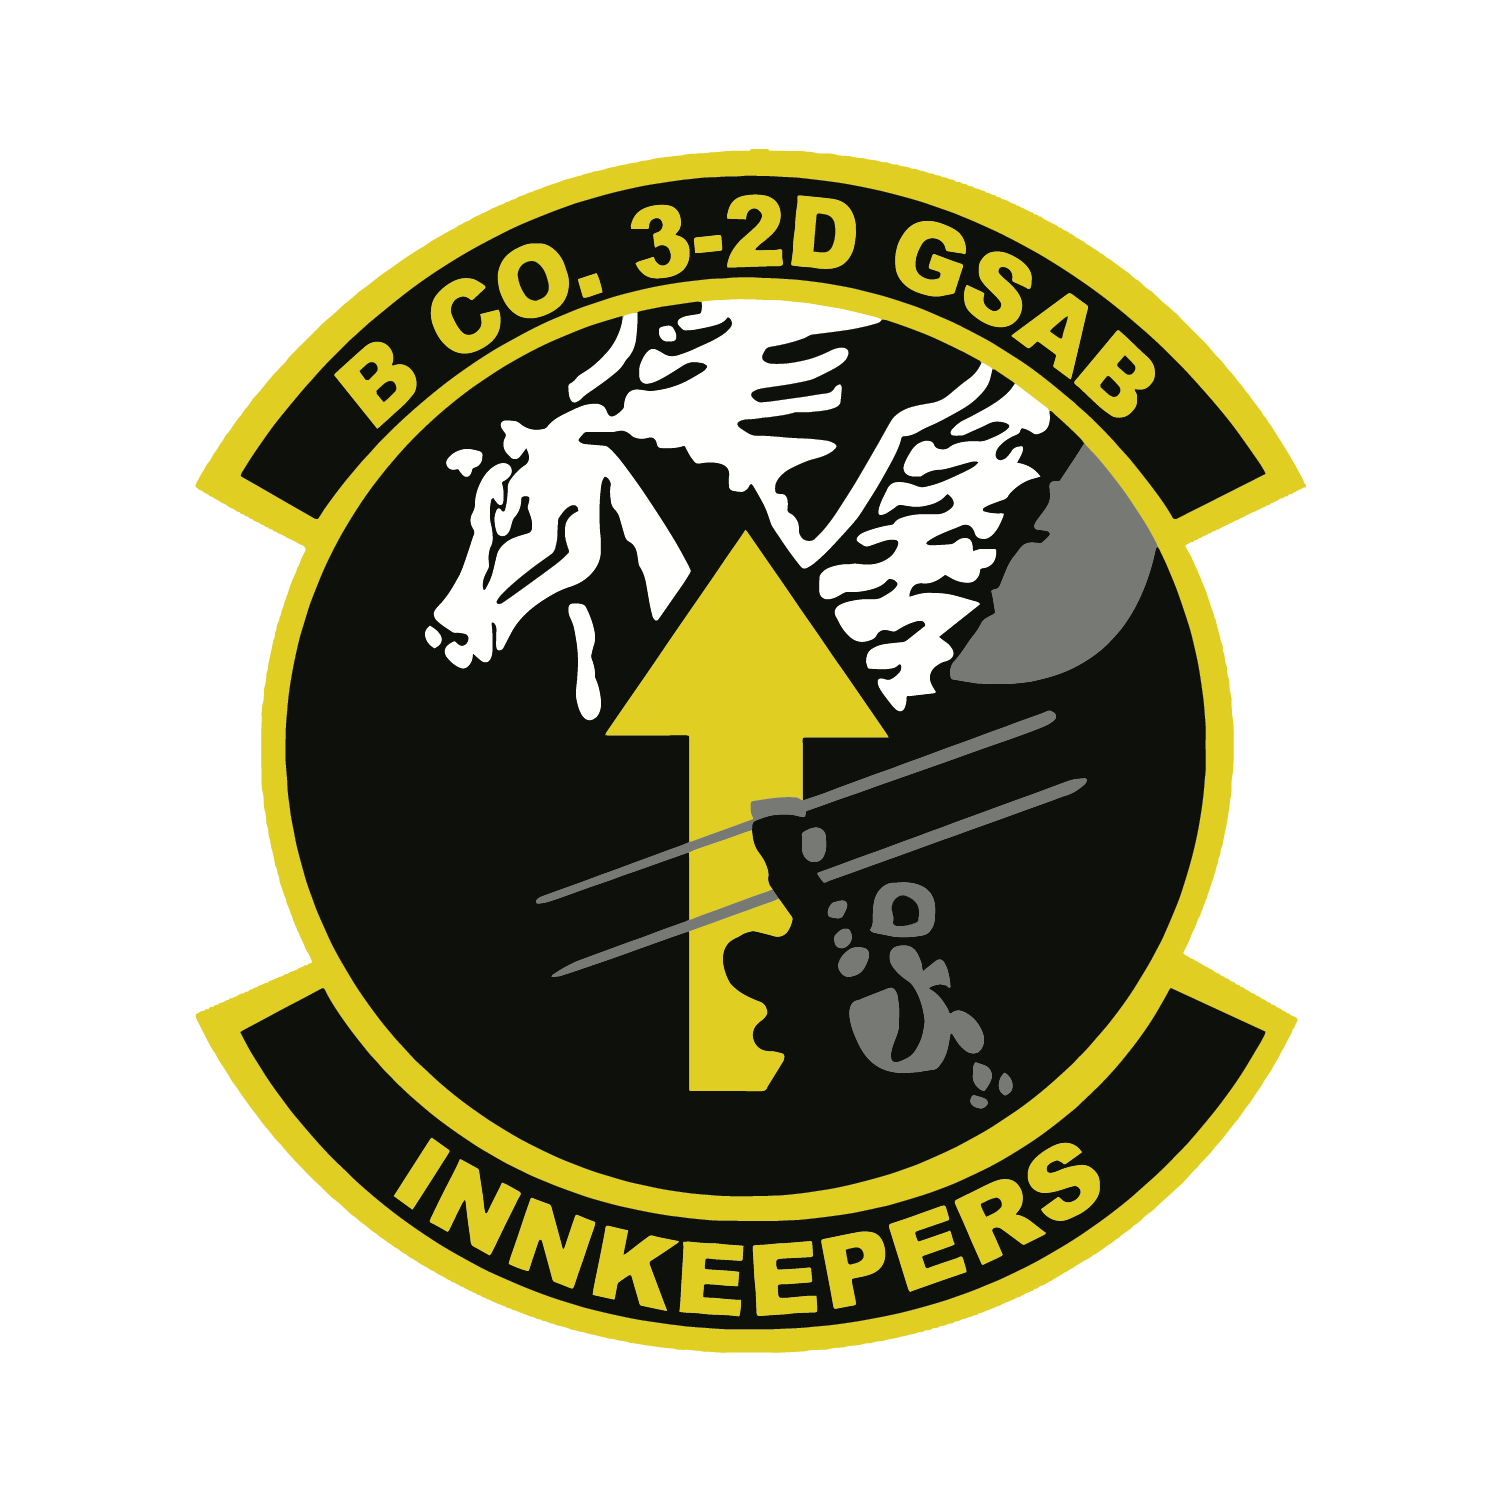 B Co, 3-2 GSAB "Innkeepers"